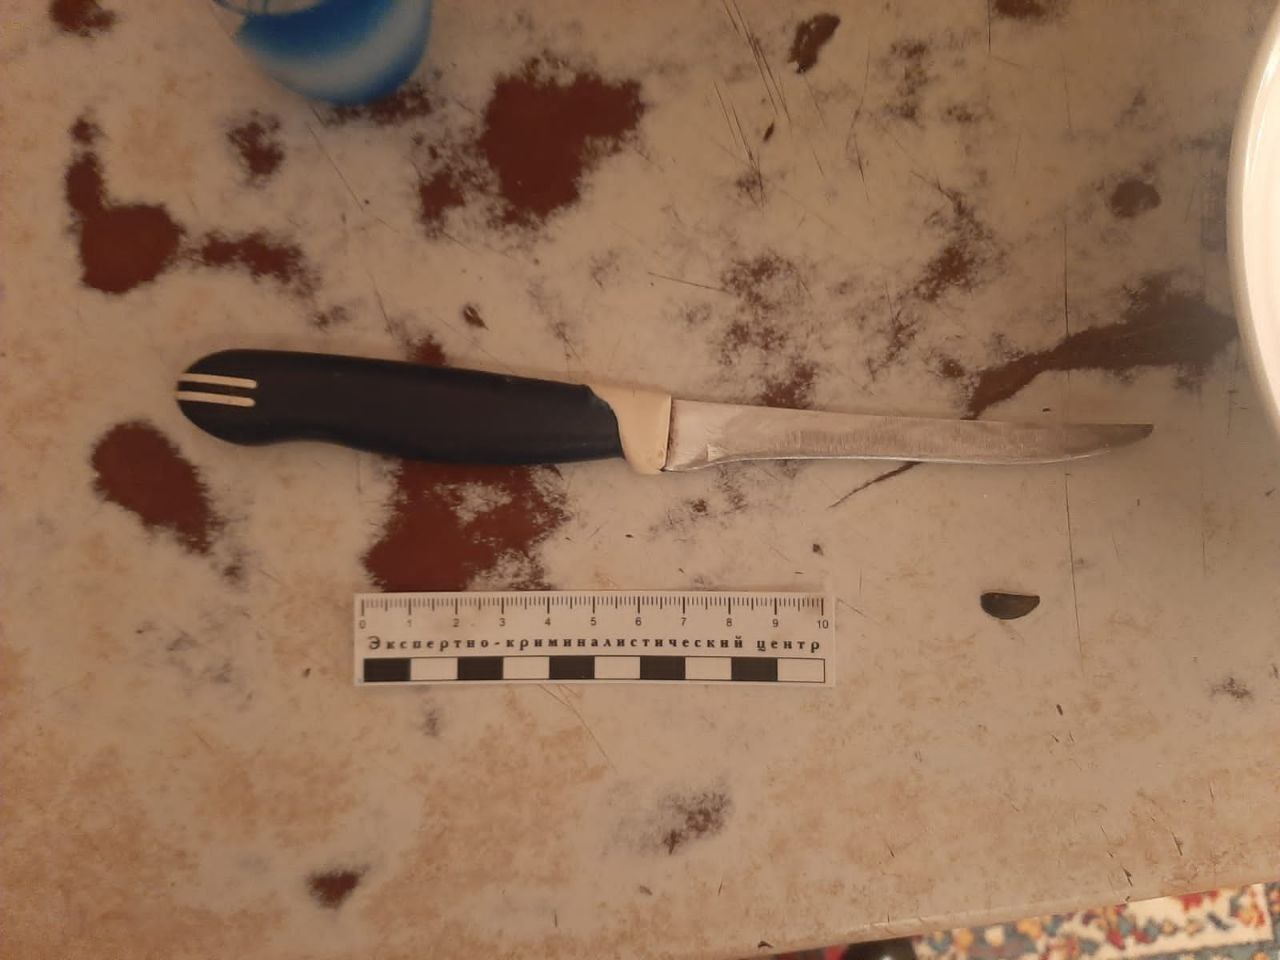 Нож в диване нашла